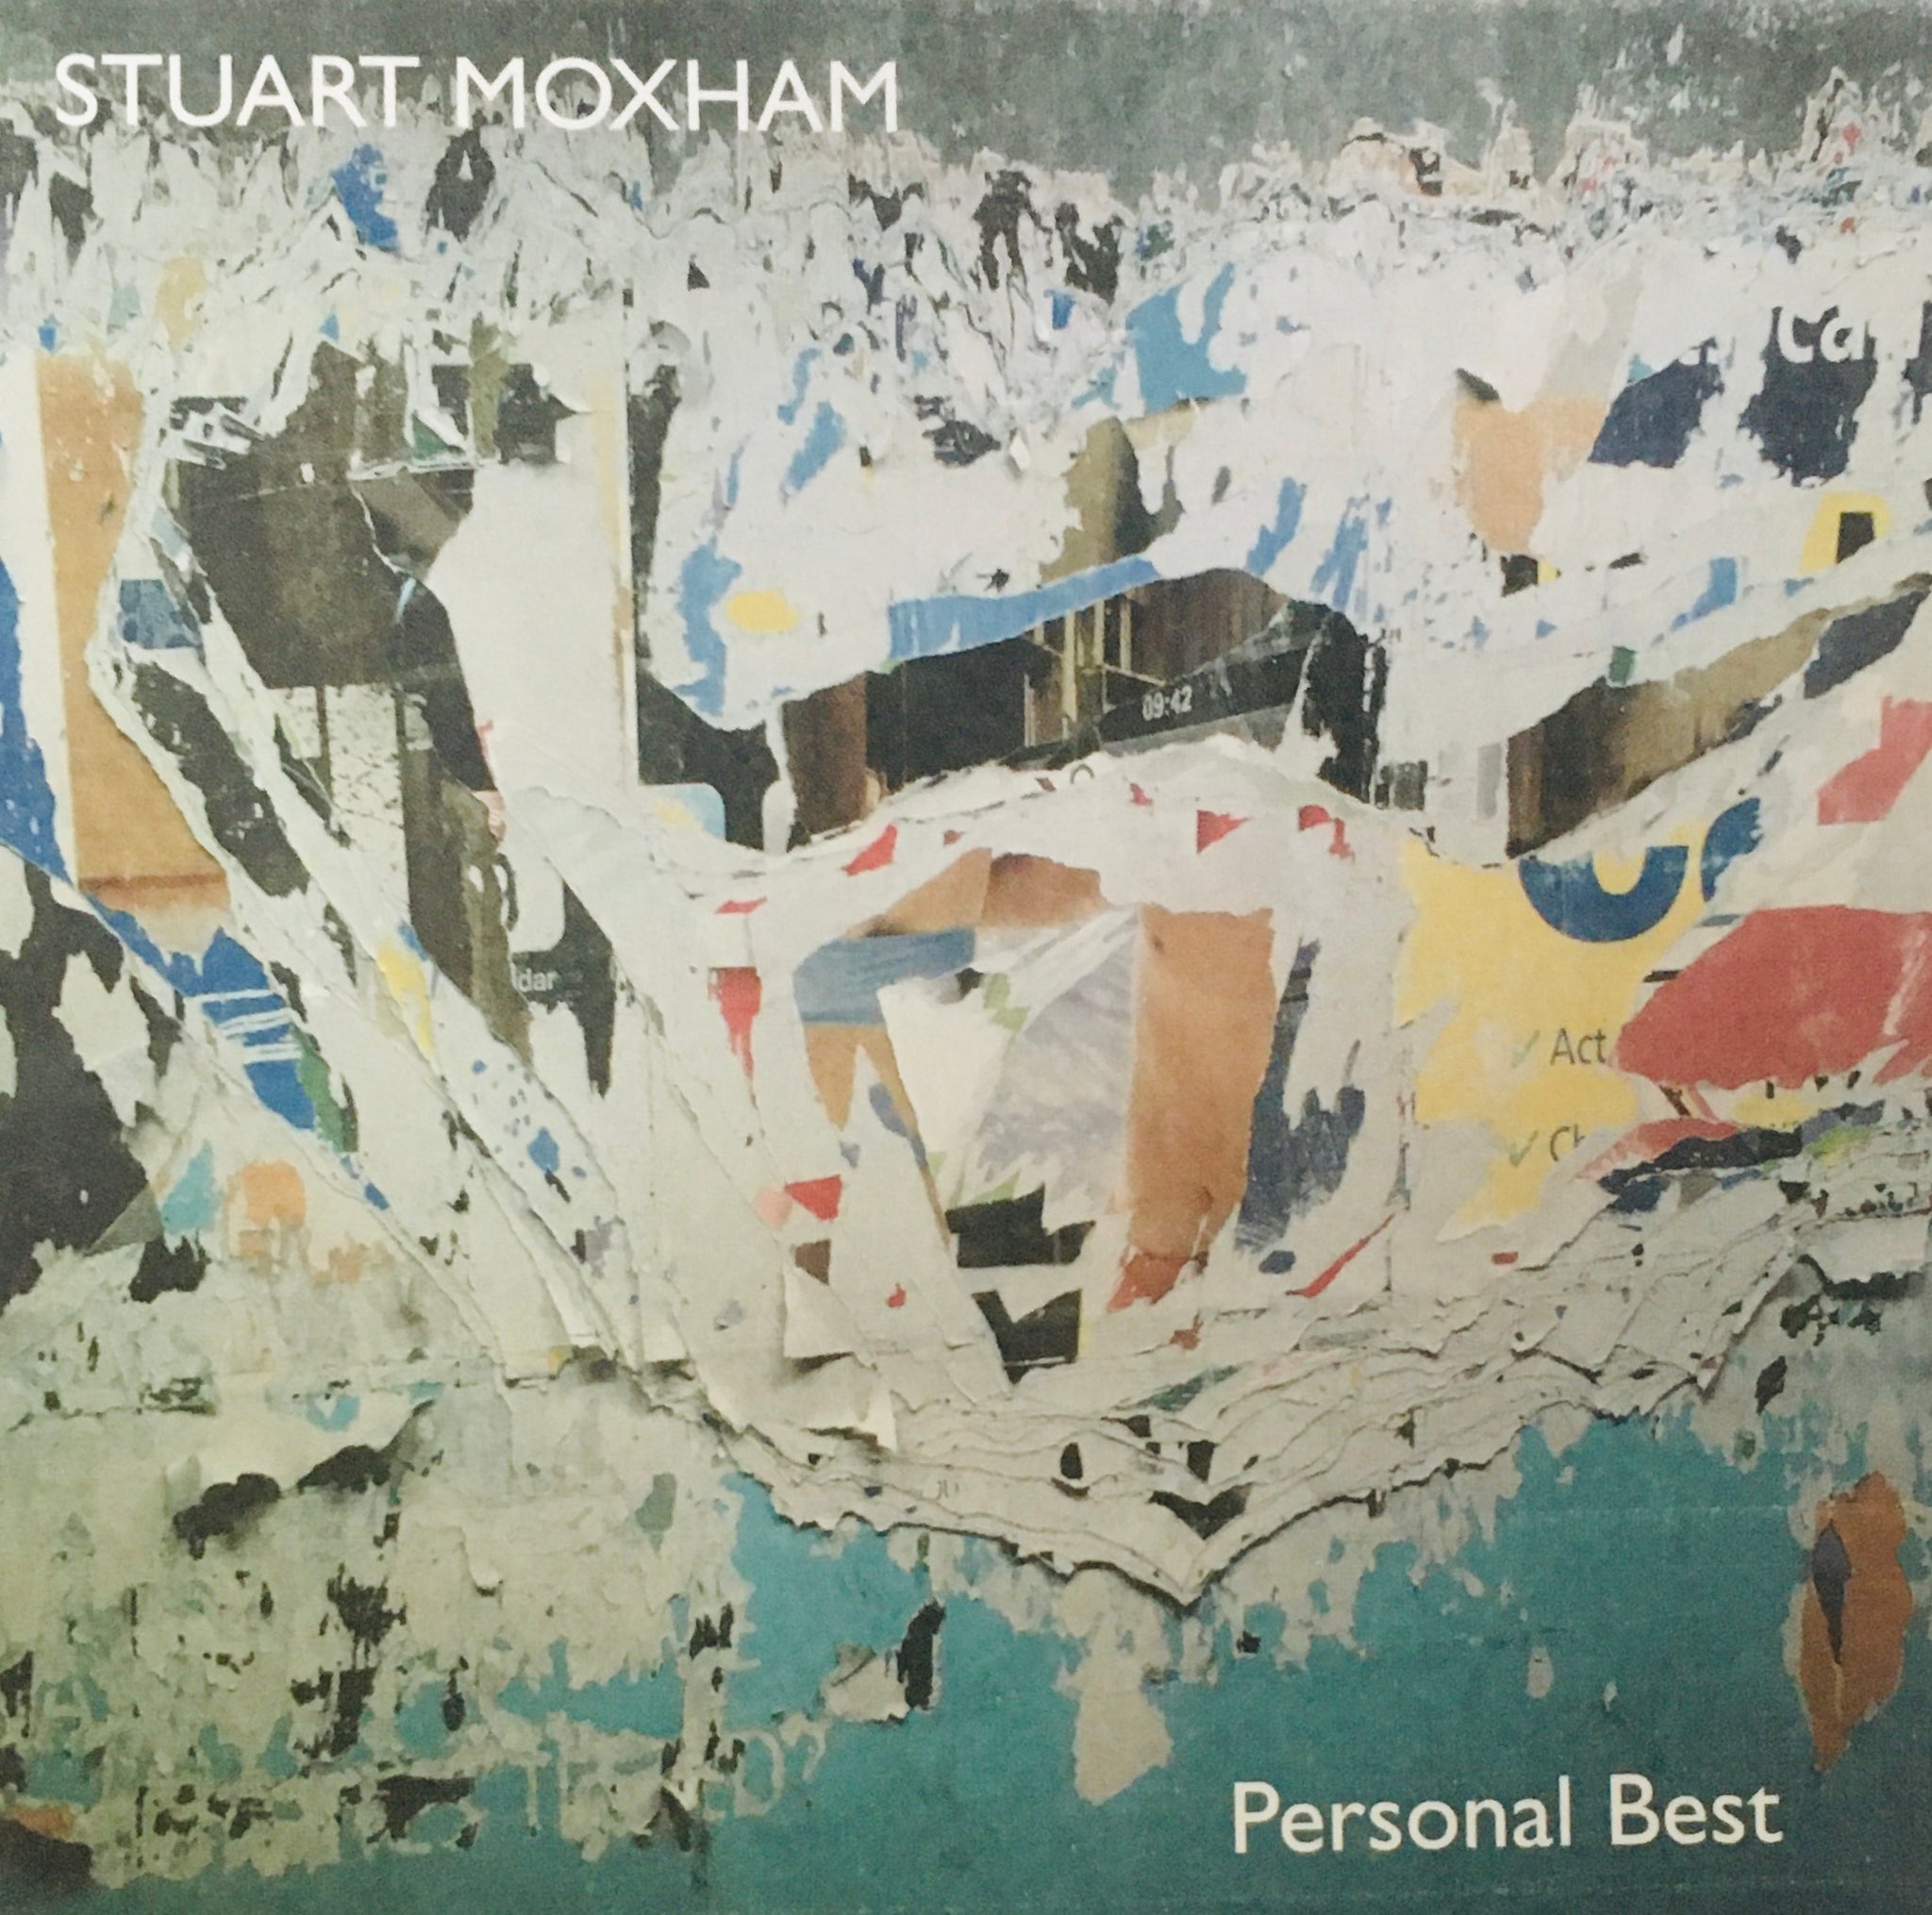 Stuart Moxham "Personal Best" CD (2010)